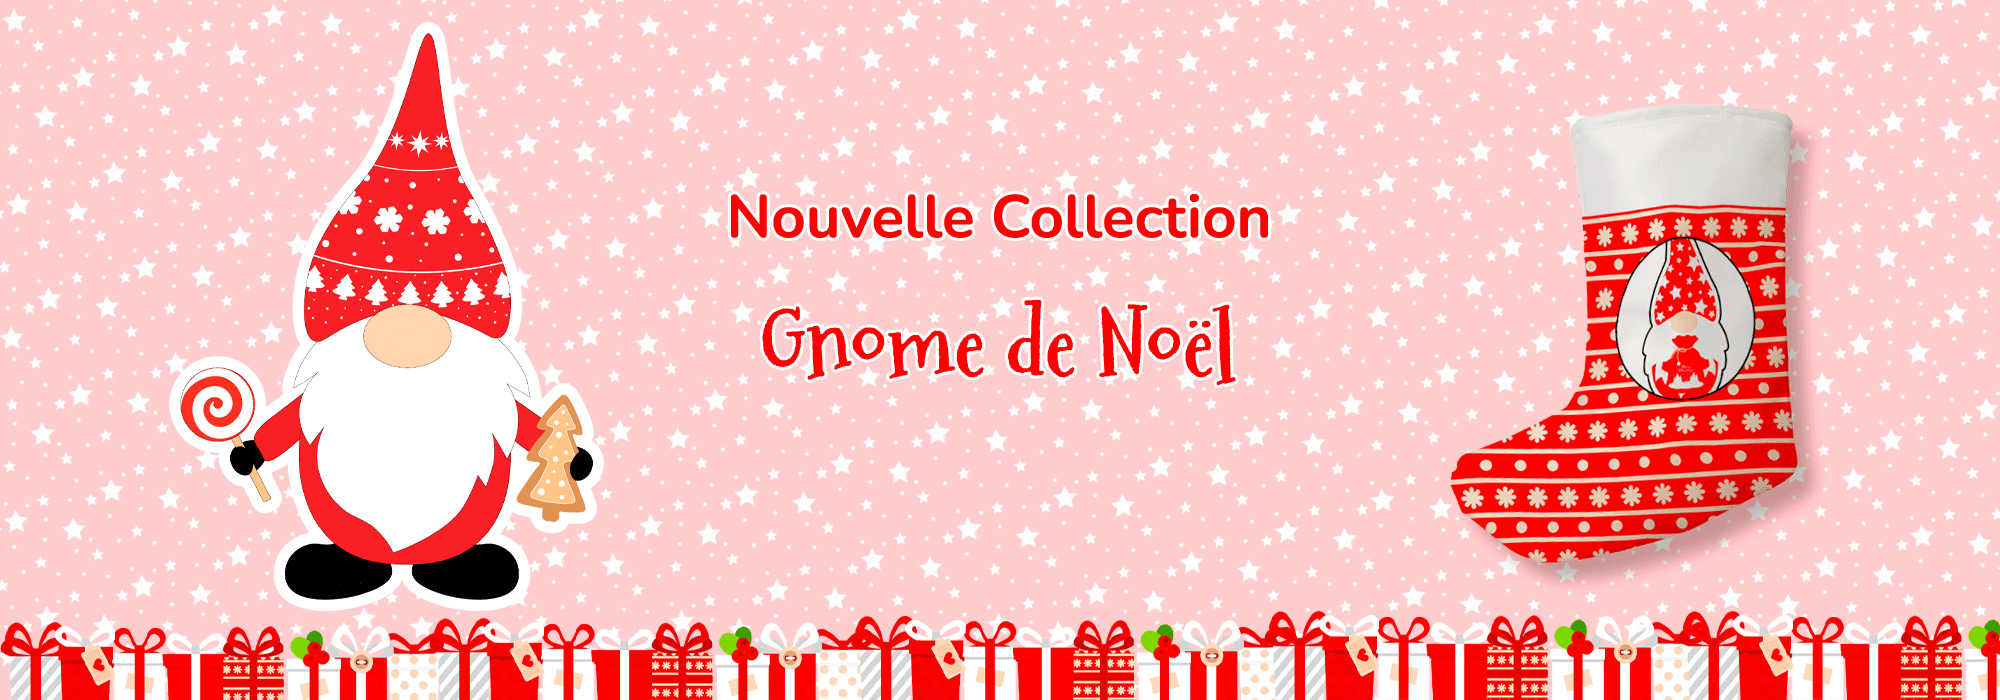 collection gnome de noel